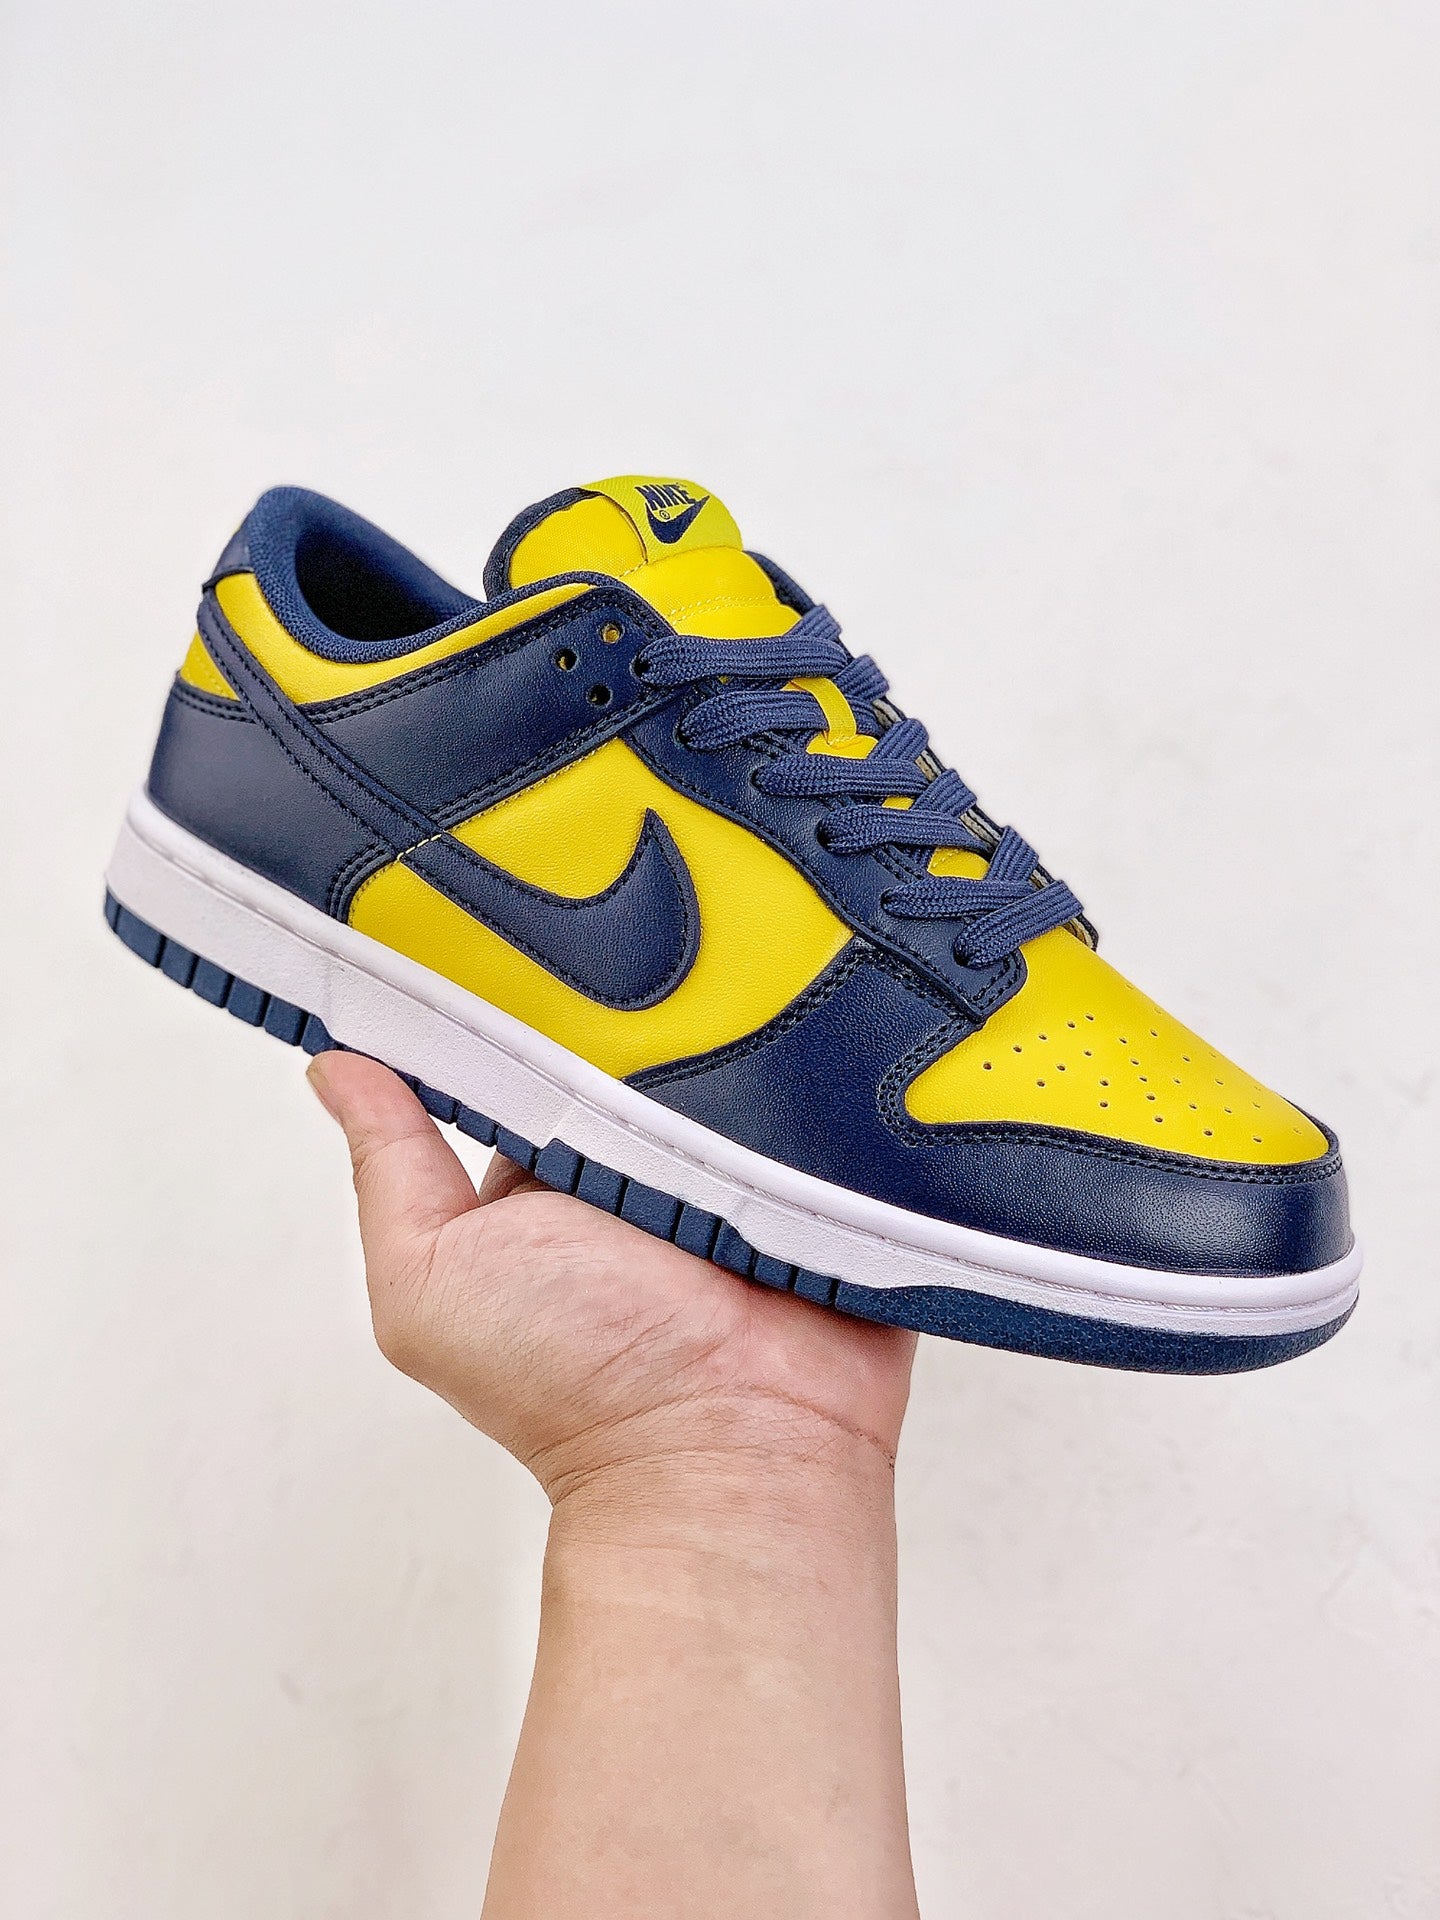 Nike SB Dunk Low "Blue Yellow "